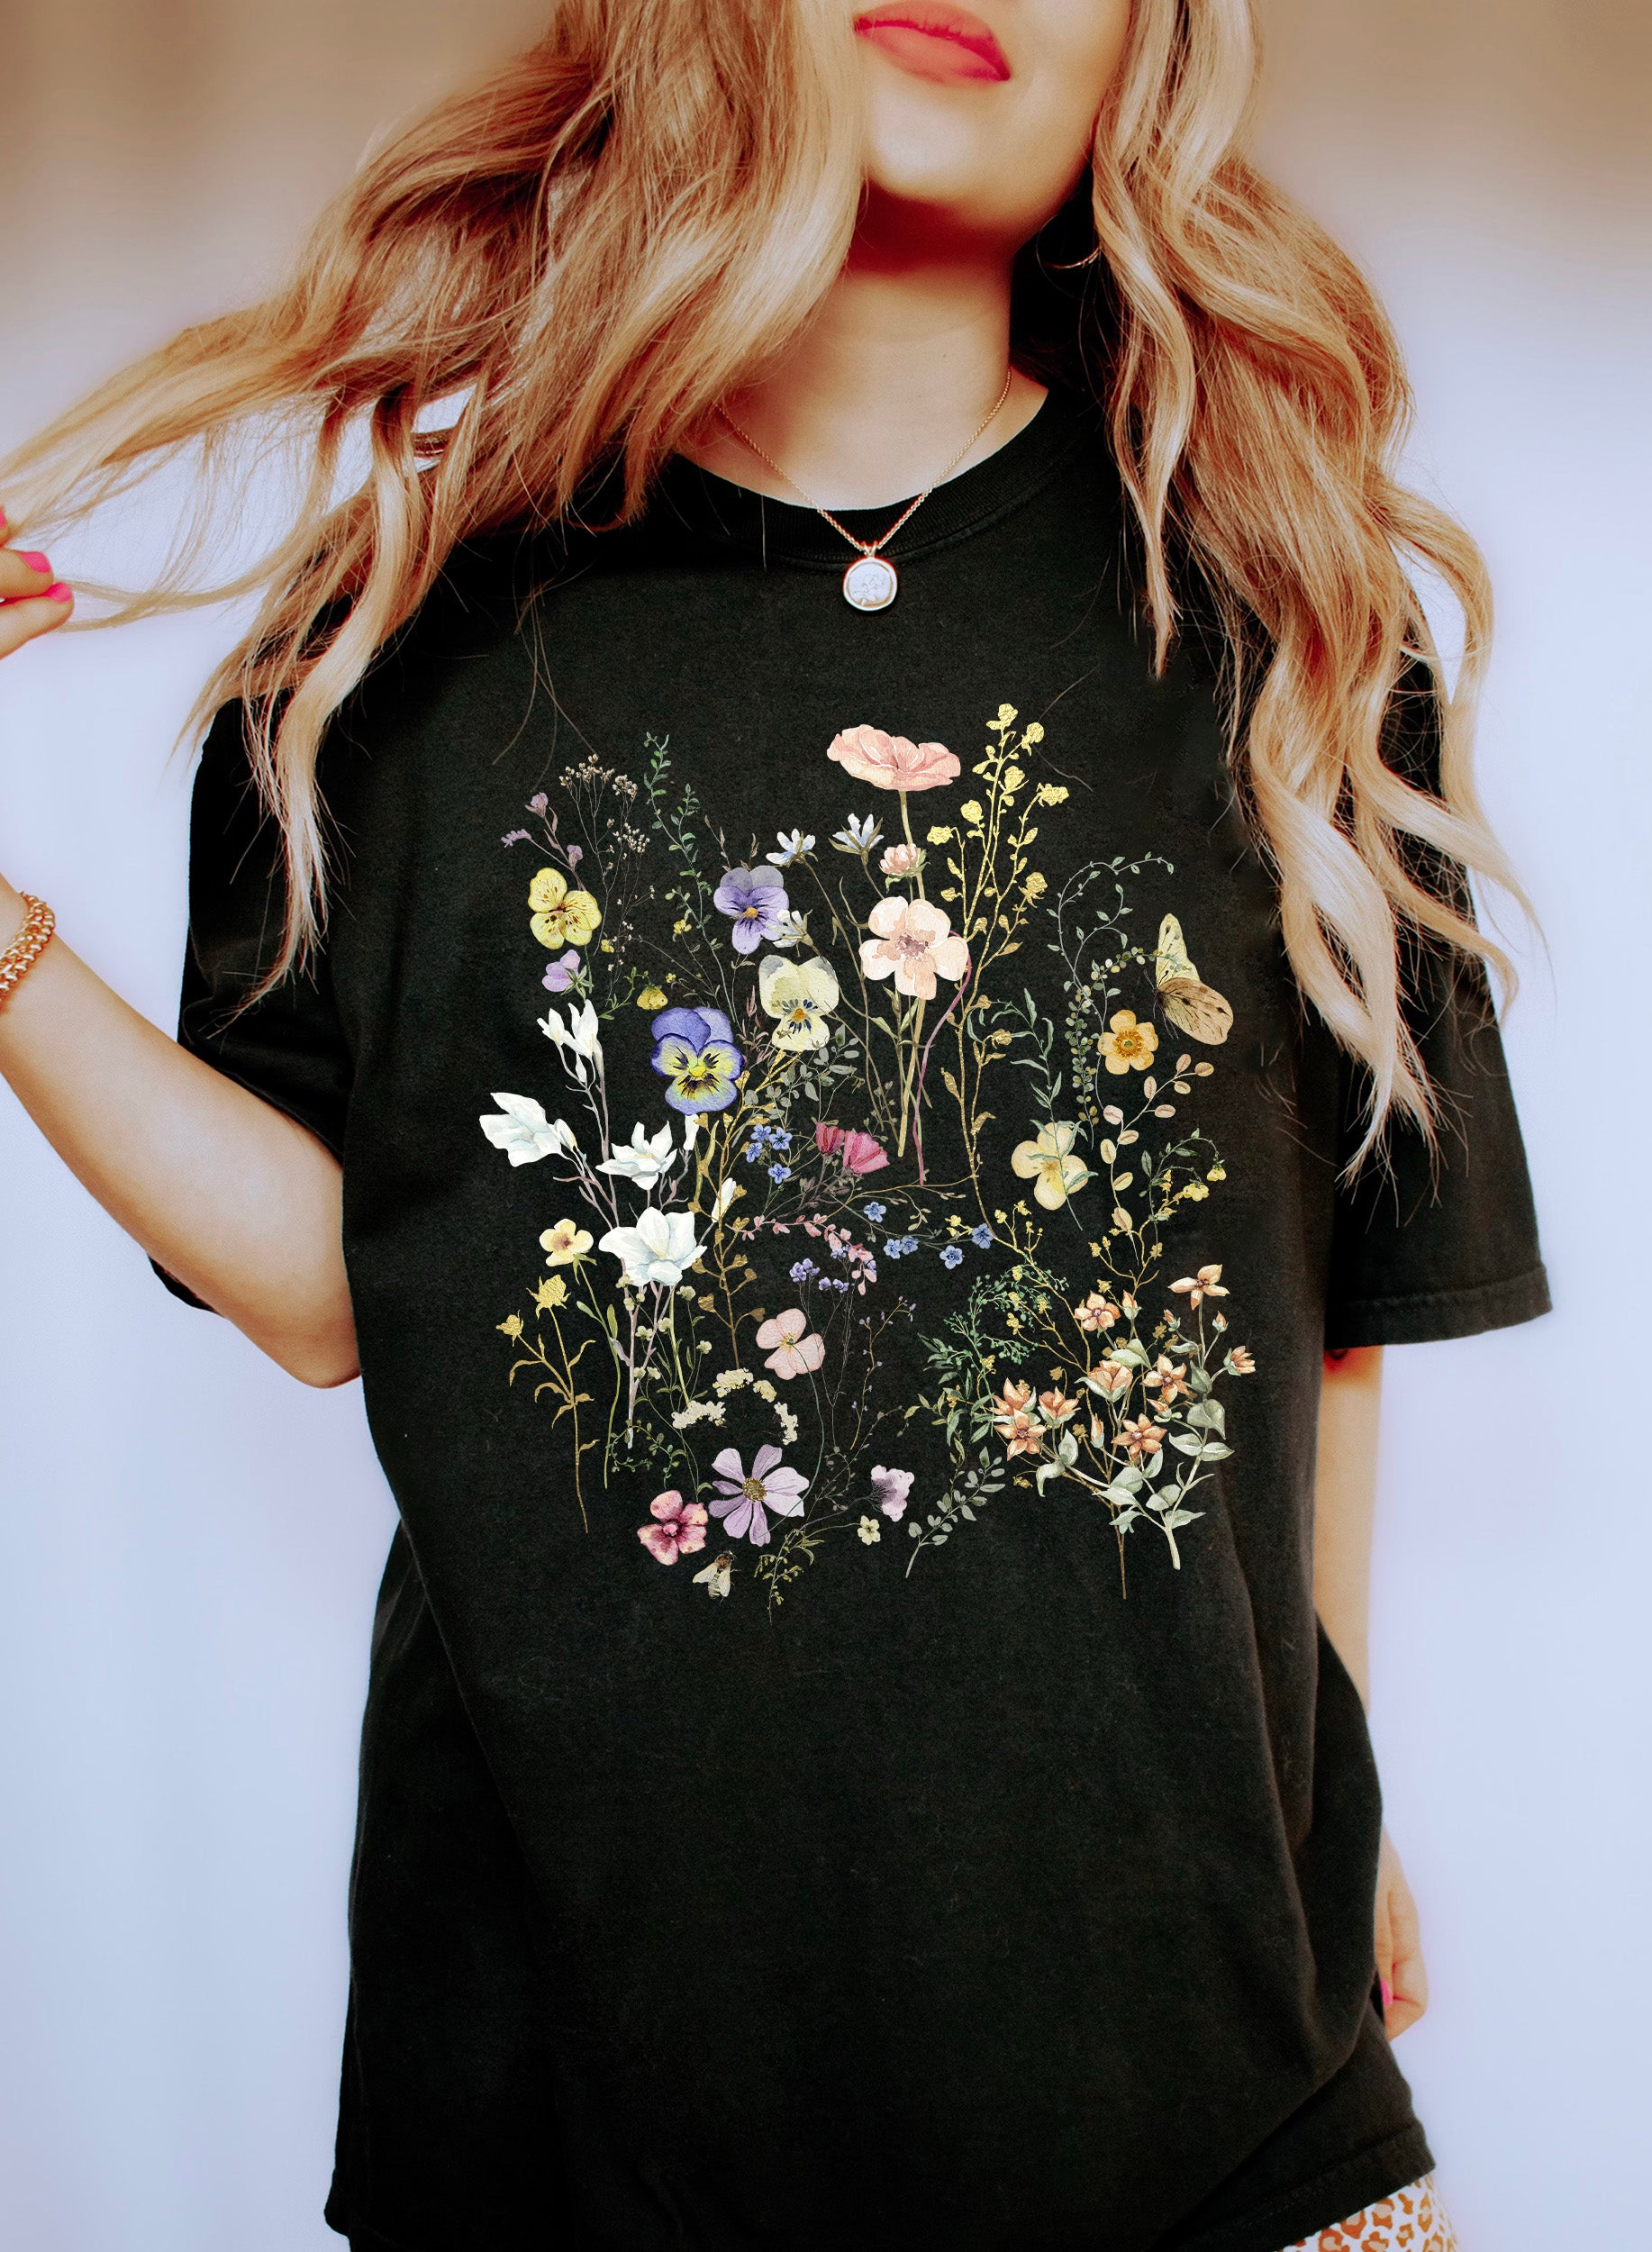 Boho Flowers Shirt Women Vintage Floral Printed T-Shirt